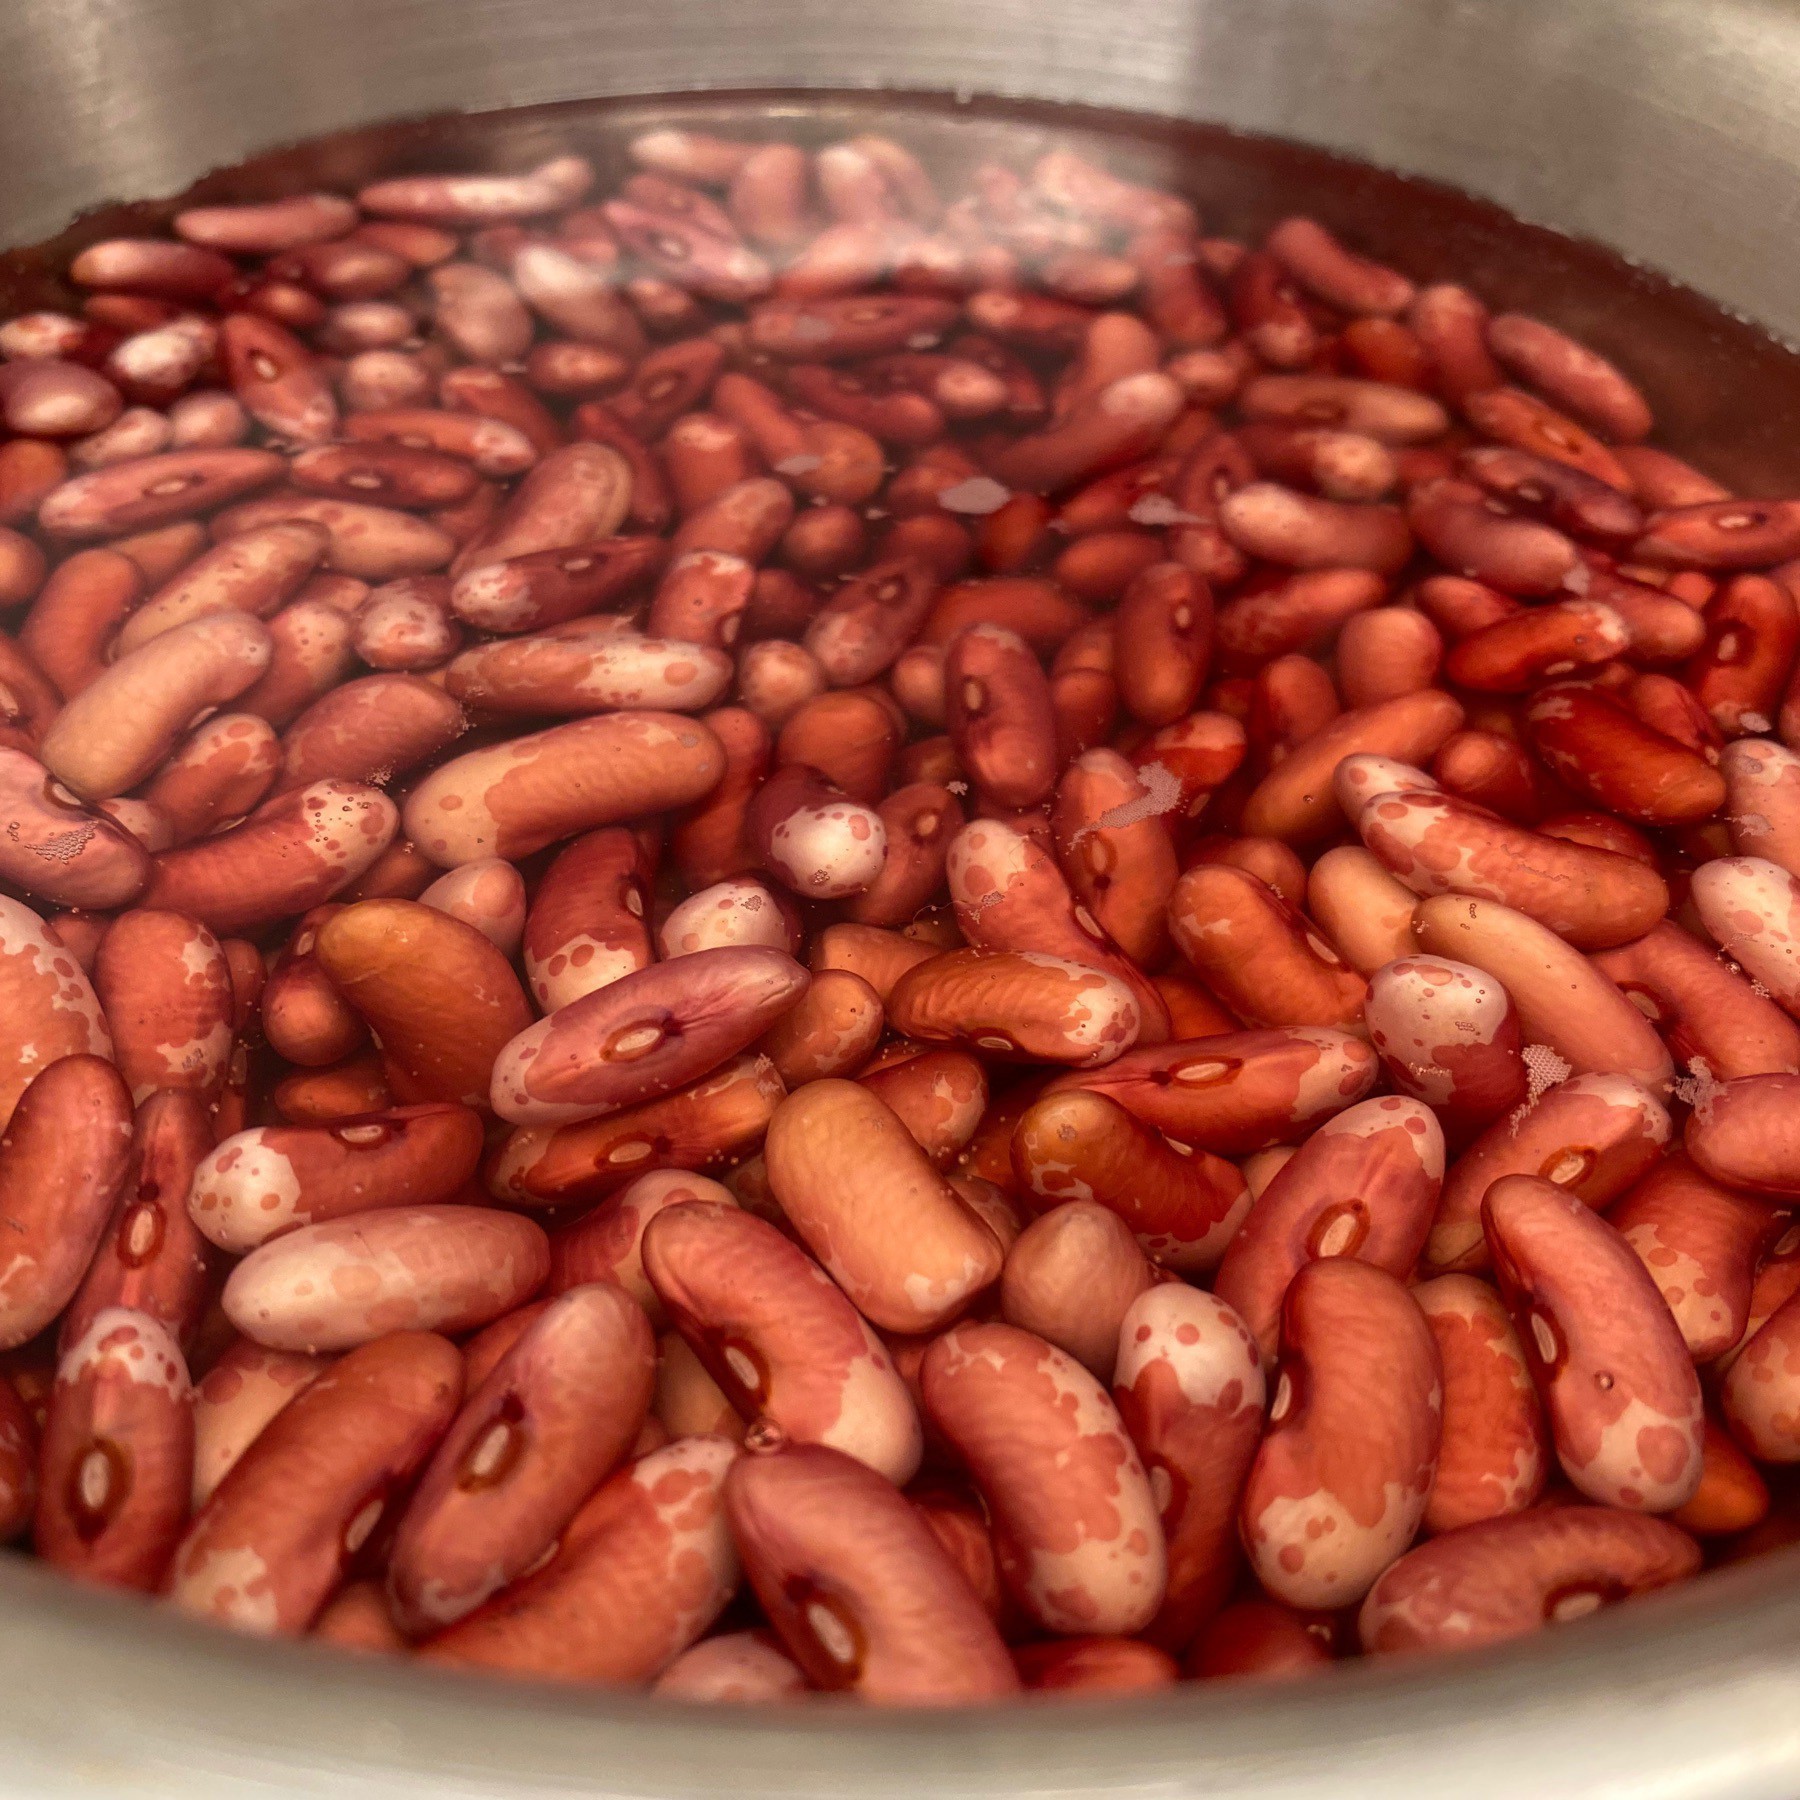 Beans soaking.